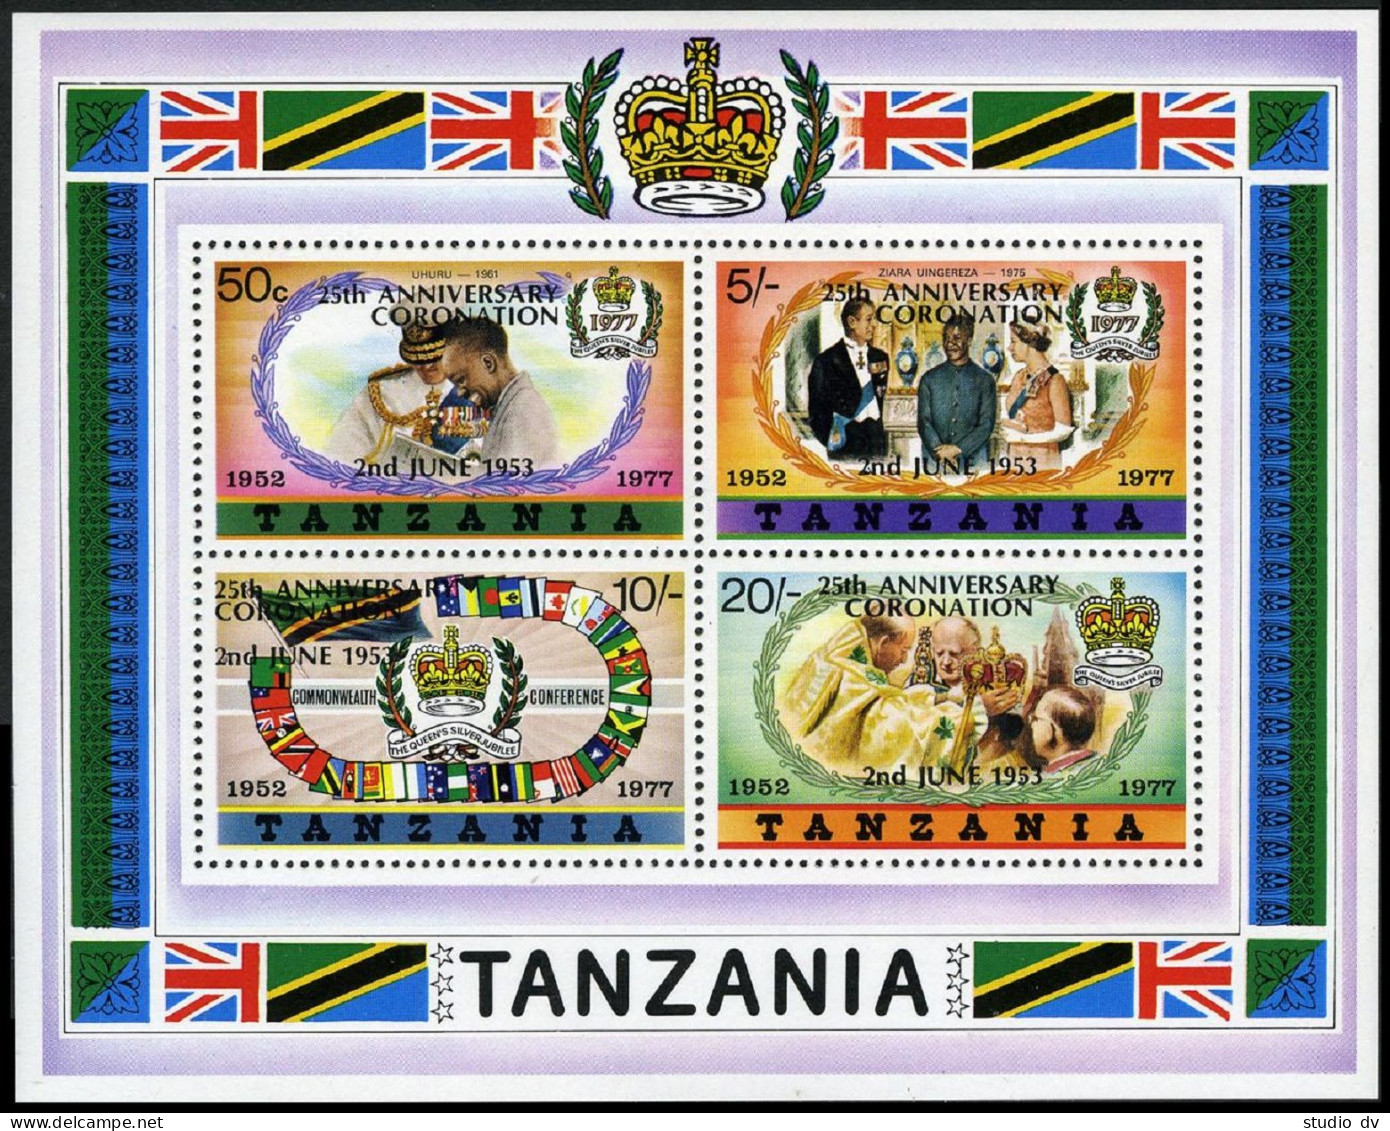 Tanzania 99-102,102a,MNH. Coronation Of QE II,25th Ann.1978.Large Letters. - Tanzania (1964-...)